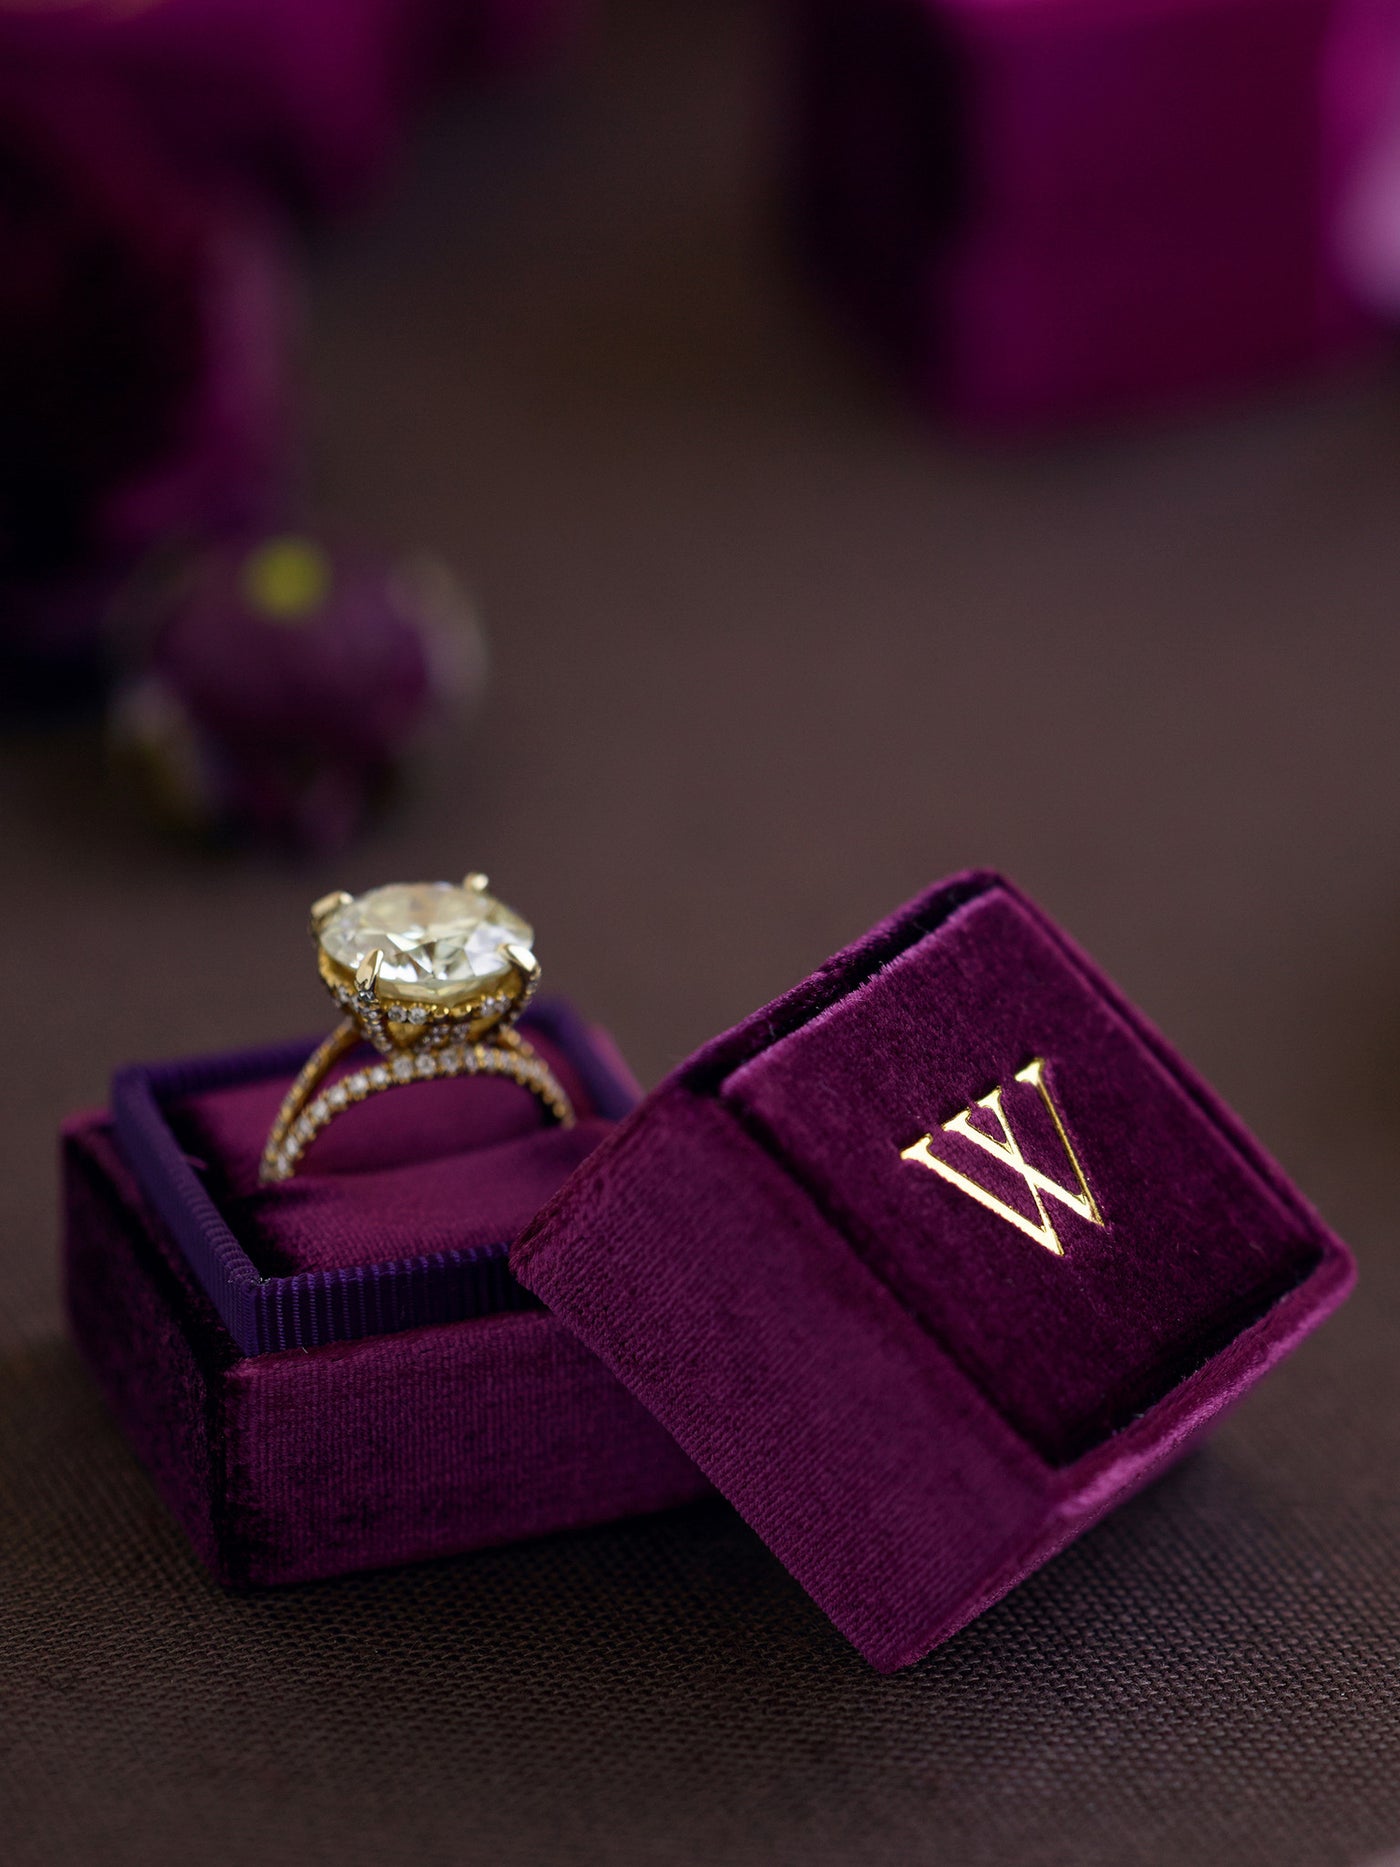 monogram gold band wedding ring box gift